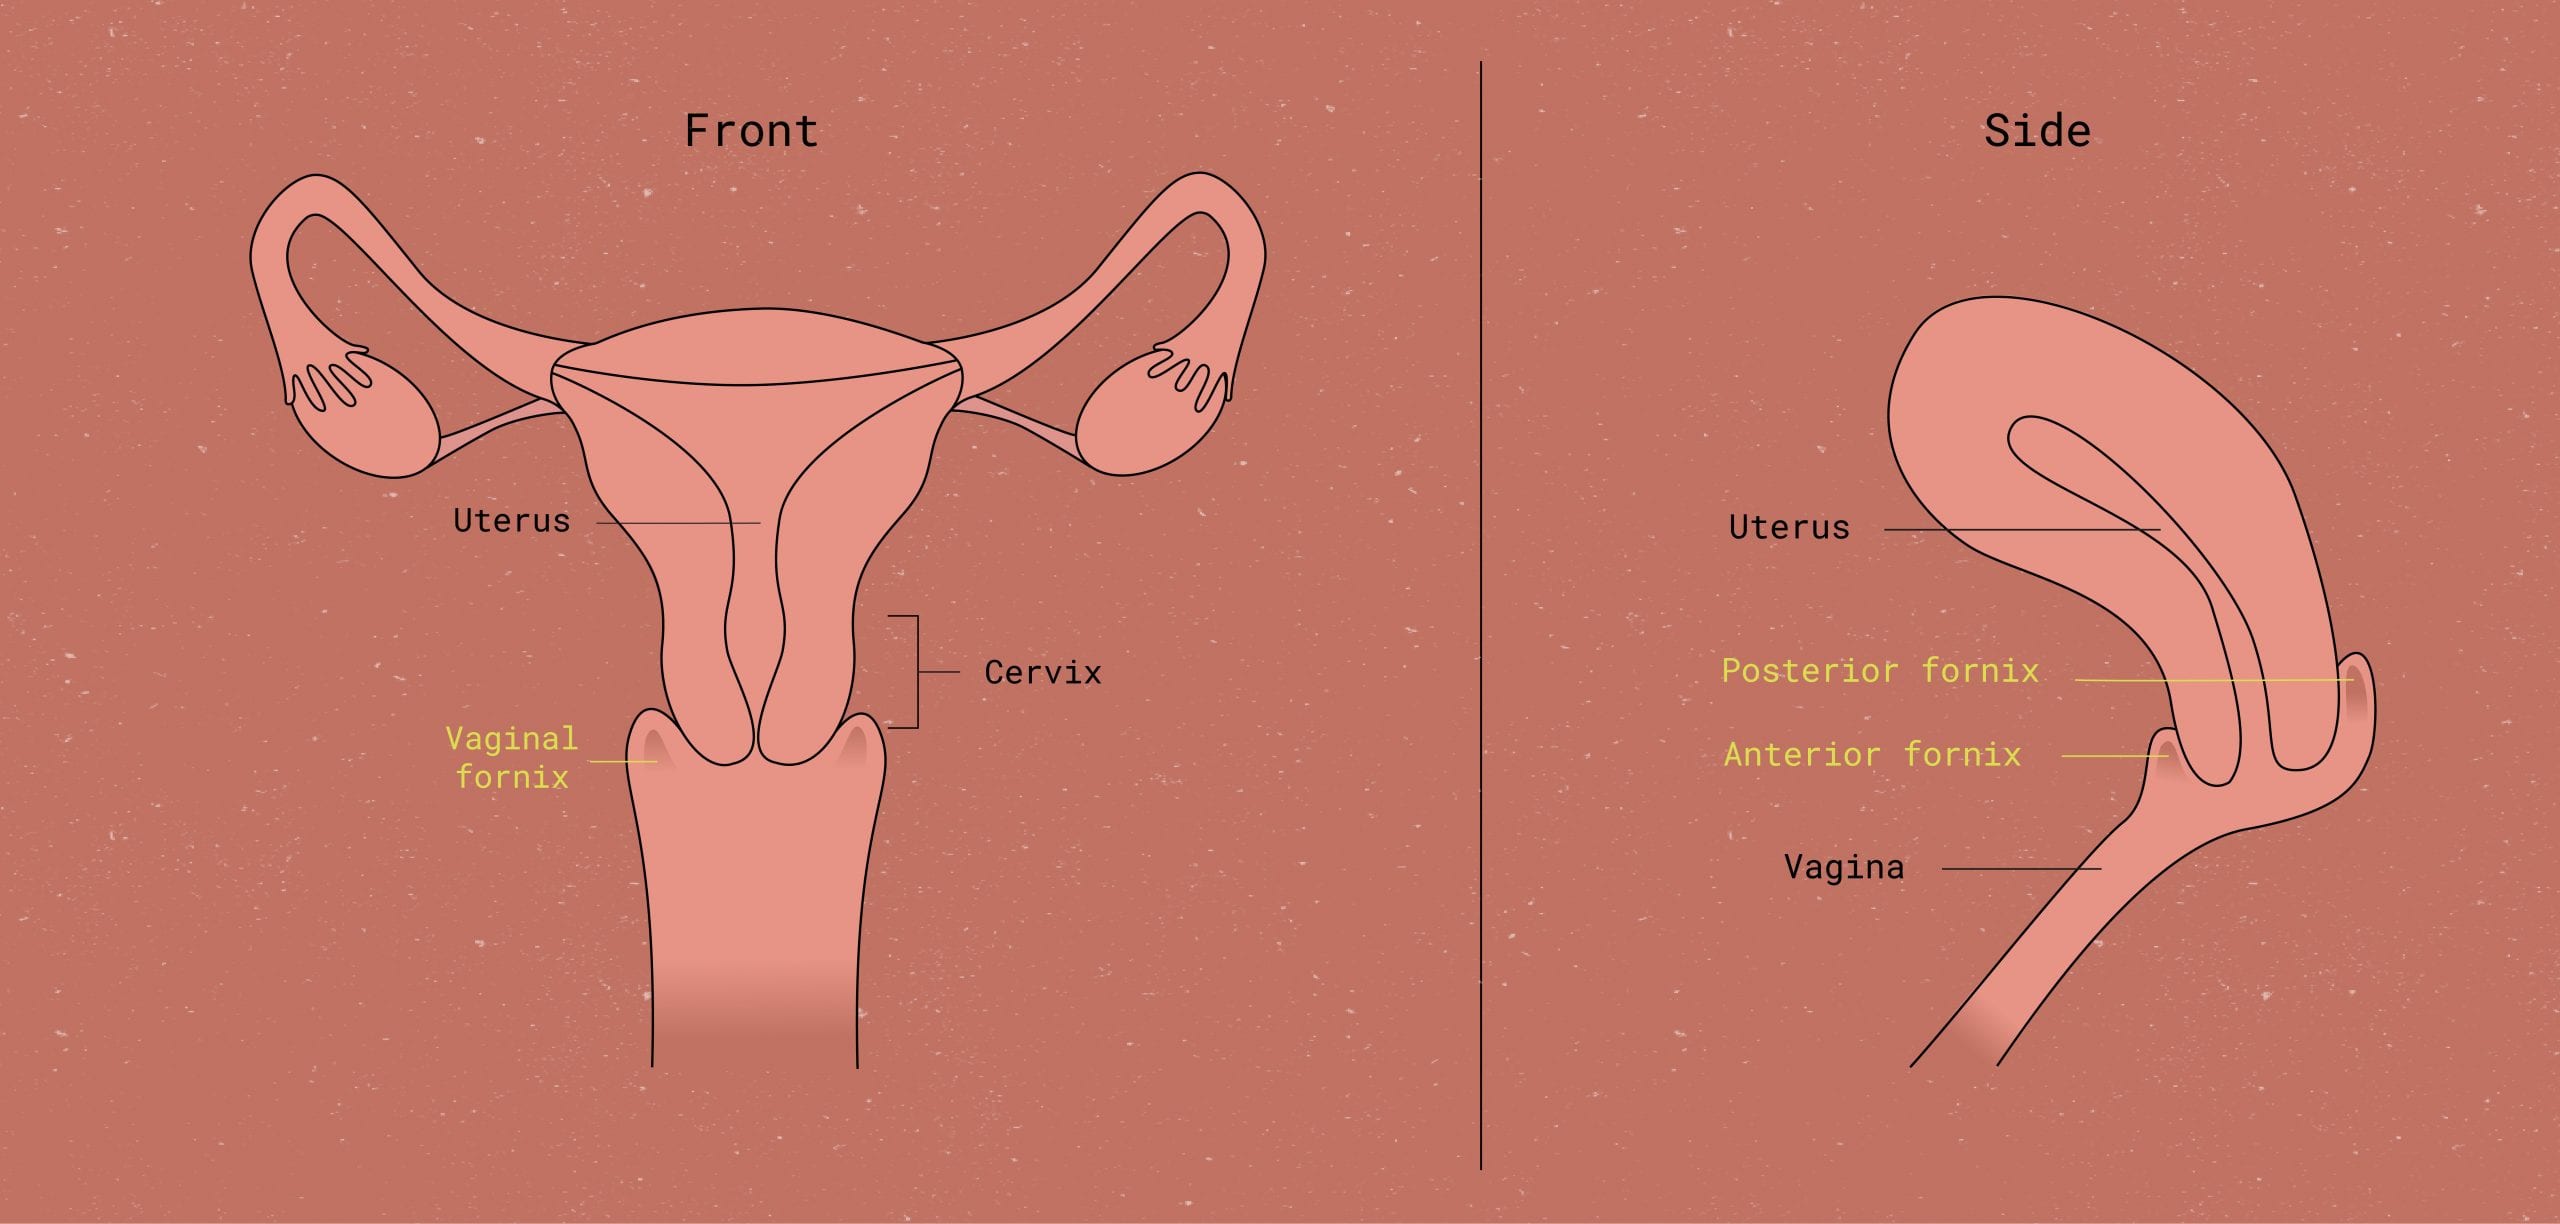 vaginal fornix diagram